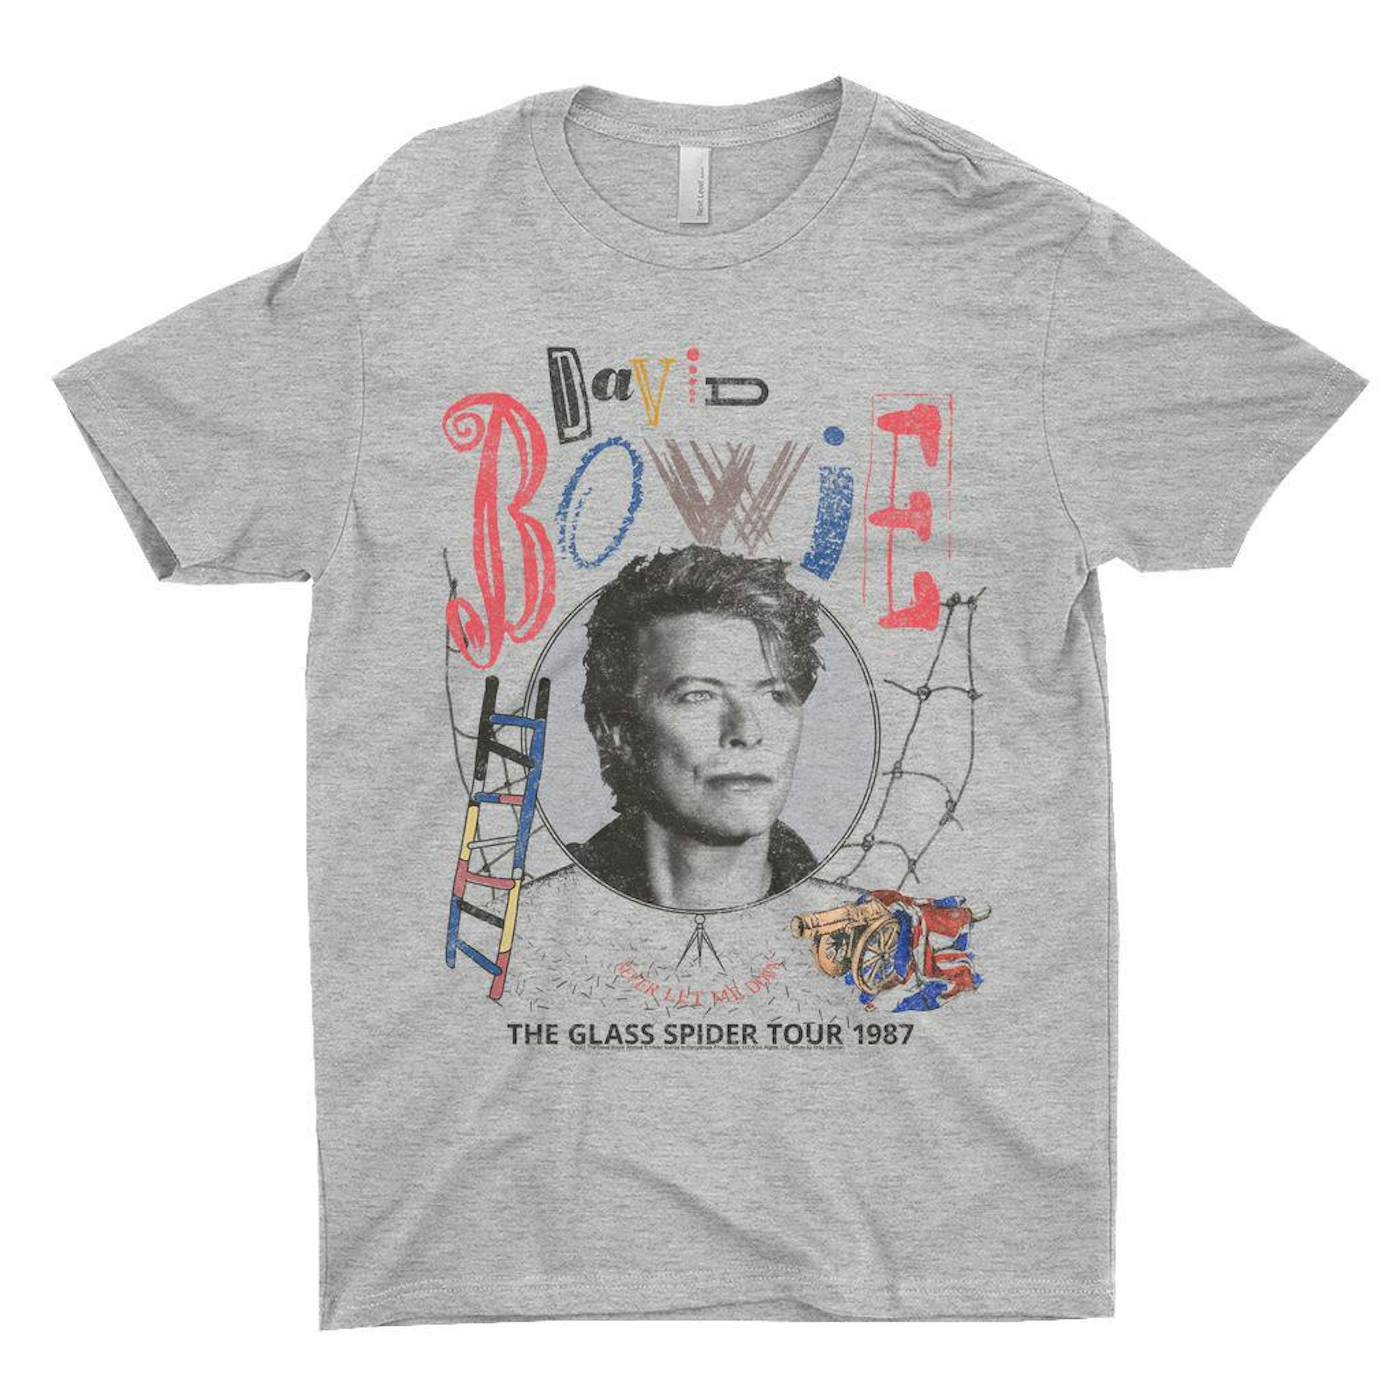 David Bowie T-Shirt | Never Let Me Down The Glass Spider Tour 1987 Distressed David Bowie Shirt